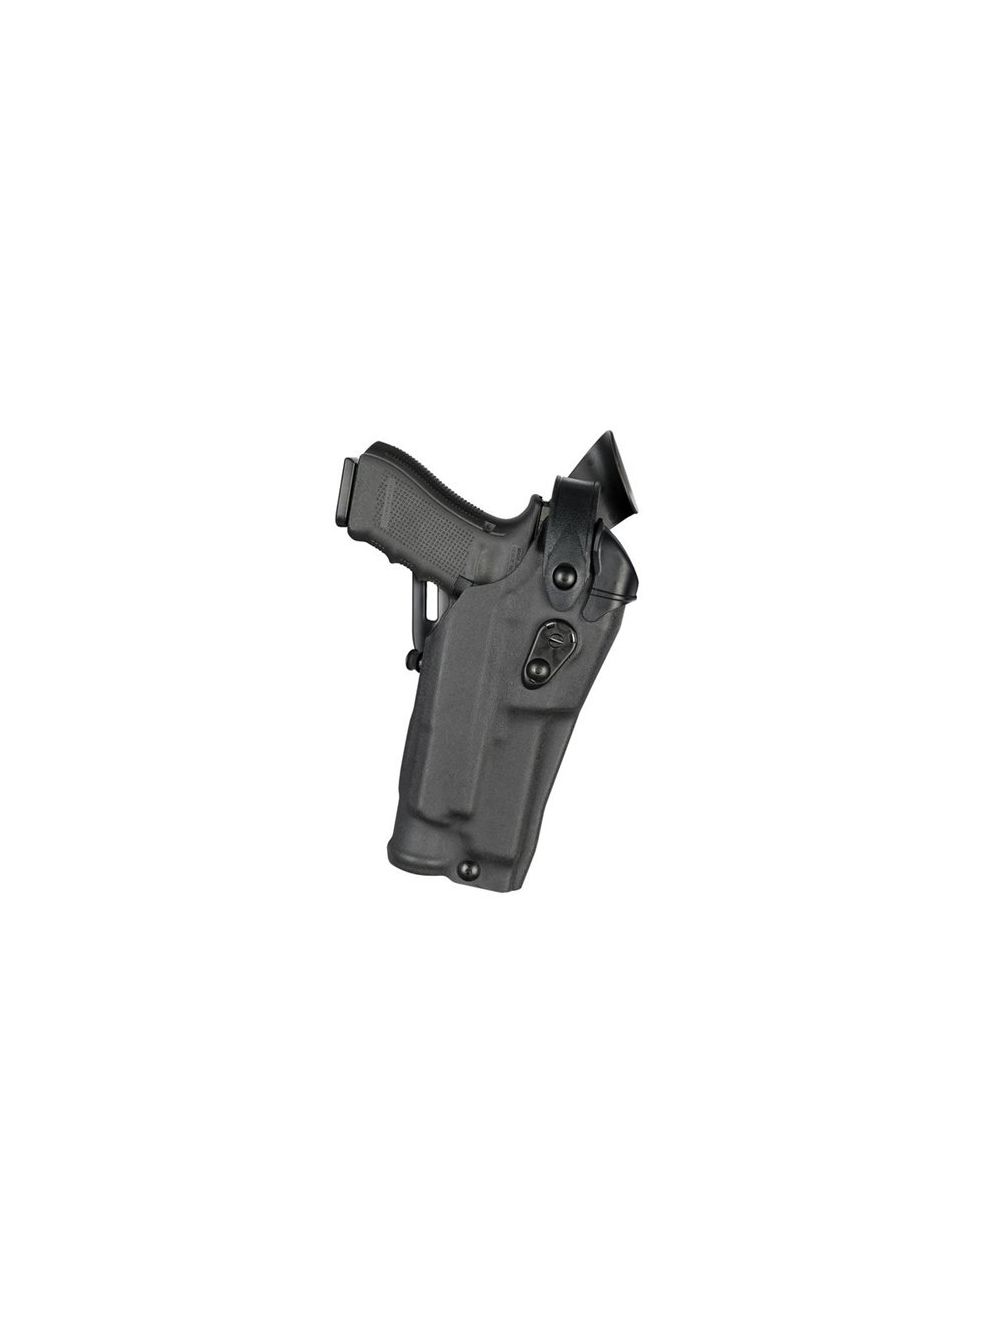 Model 6360RDS ALS/SLS Mid-Ride, Level III Retention Duty Holster for Glock 17 w/ Light/Laser